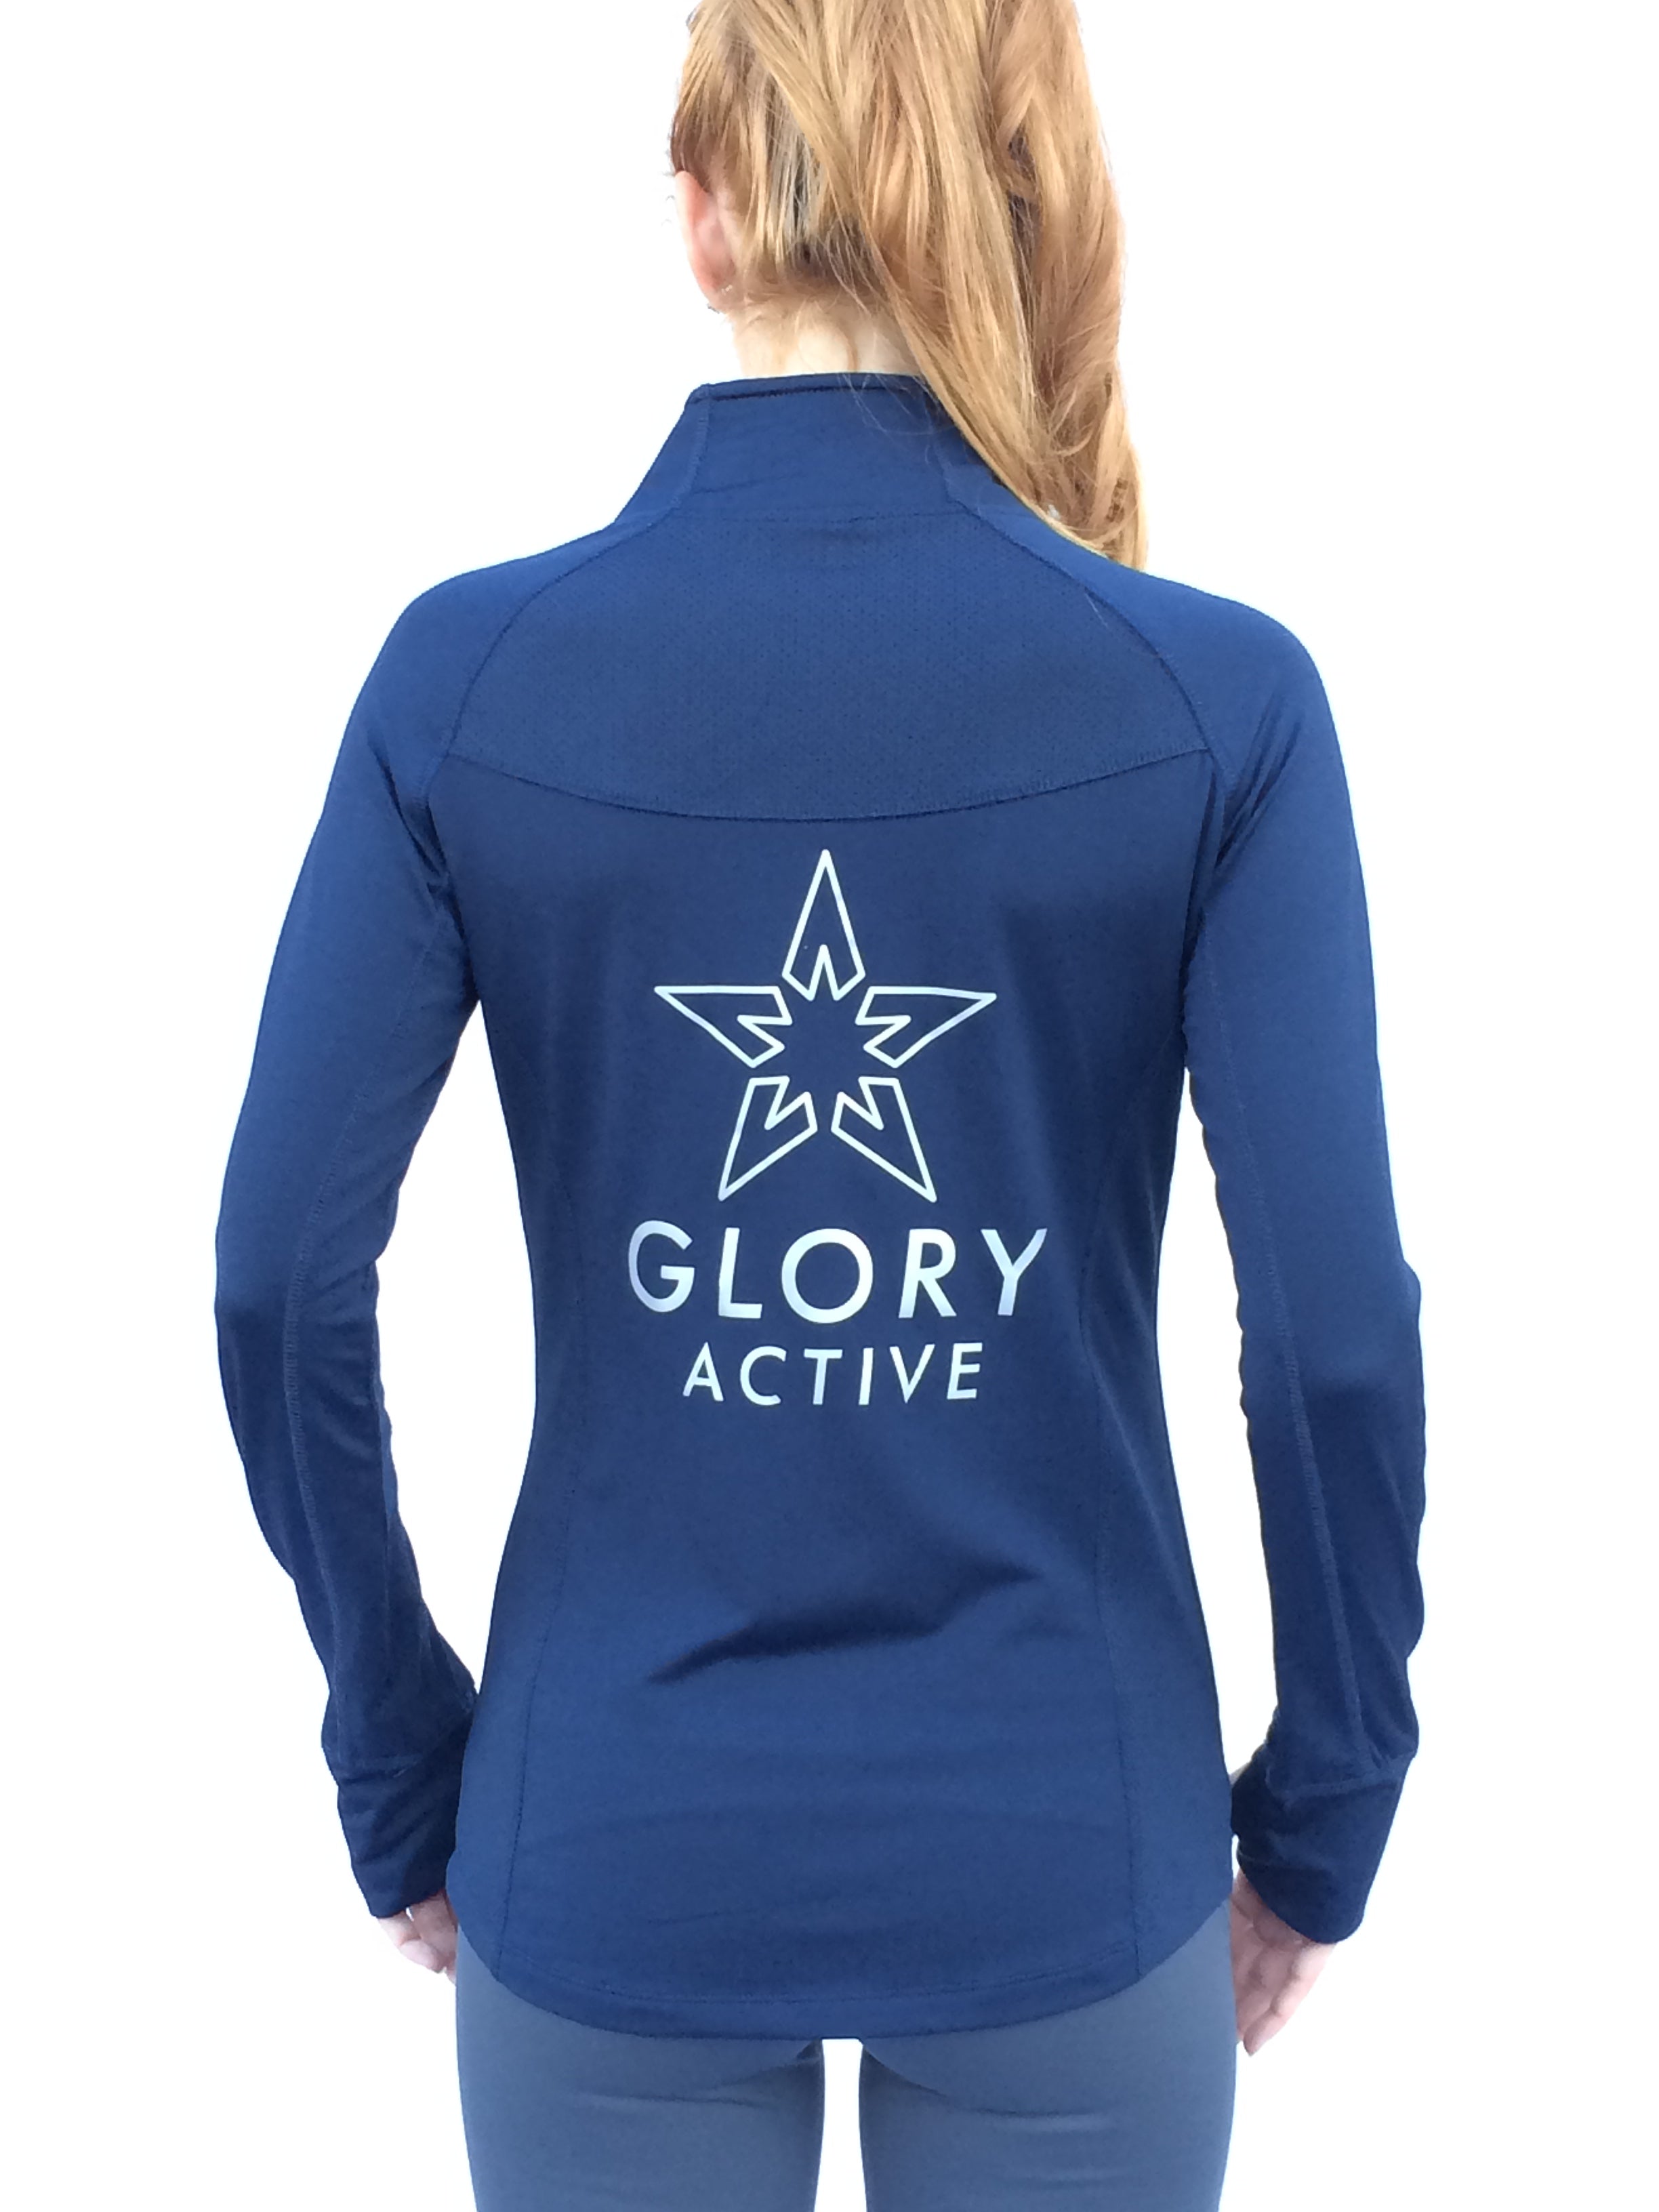 Performance Jacket - "Glory Active Signature"